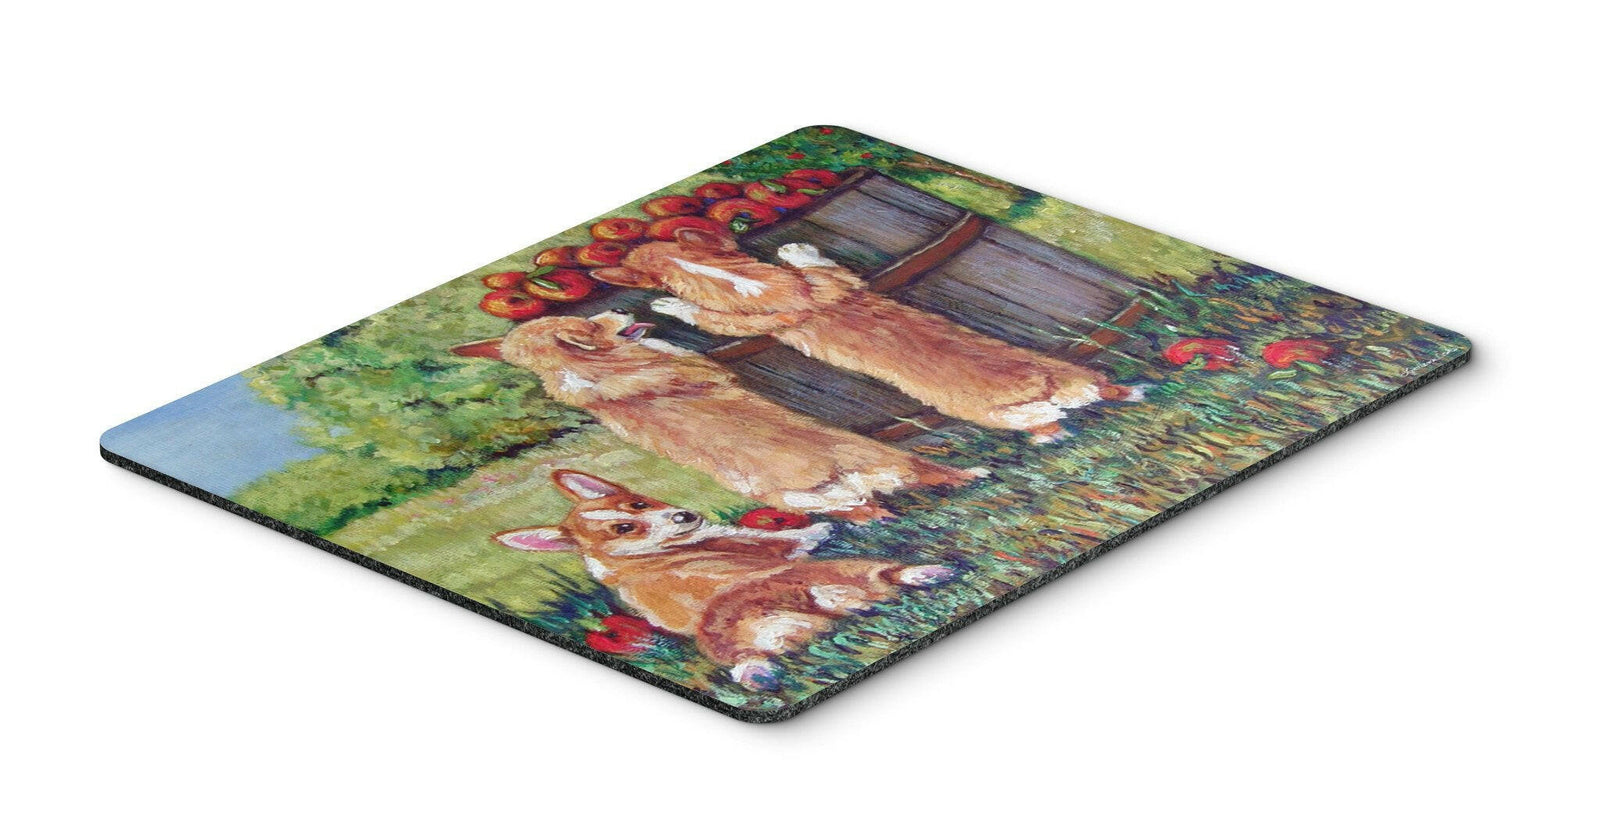 Apple Helper Corgis Mouse Pad, Hot Pad or Trivet 7351MP by Caroline's Treasures